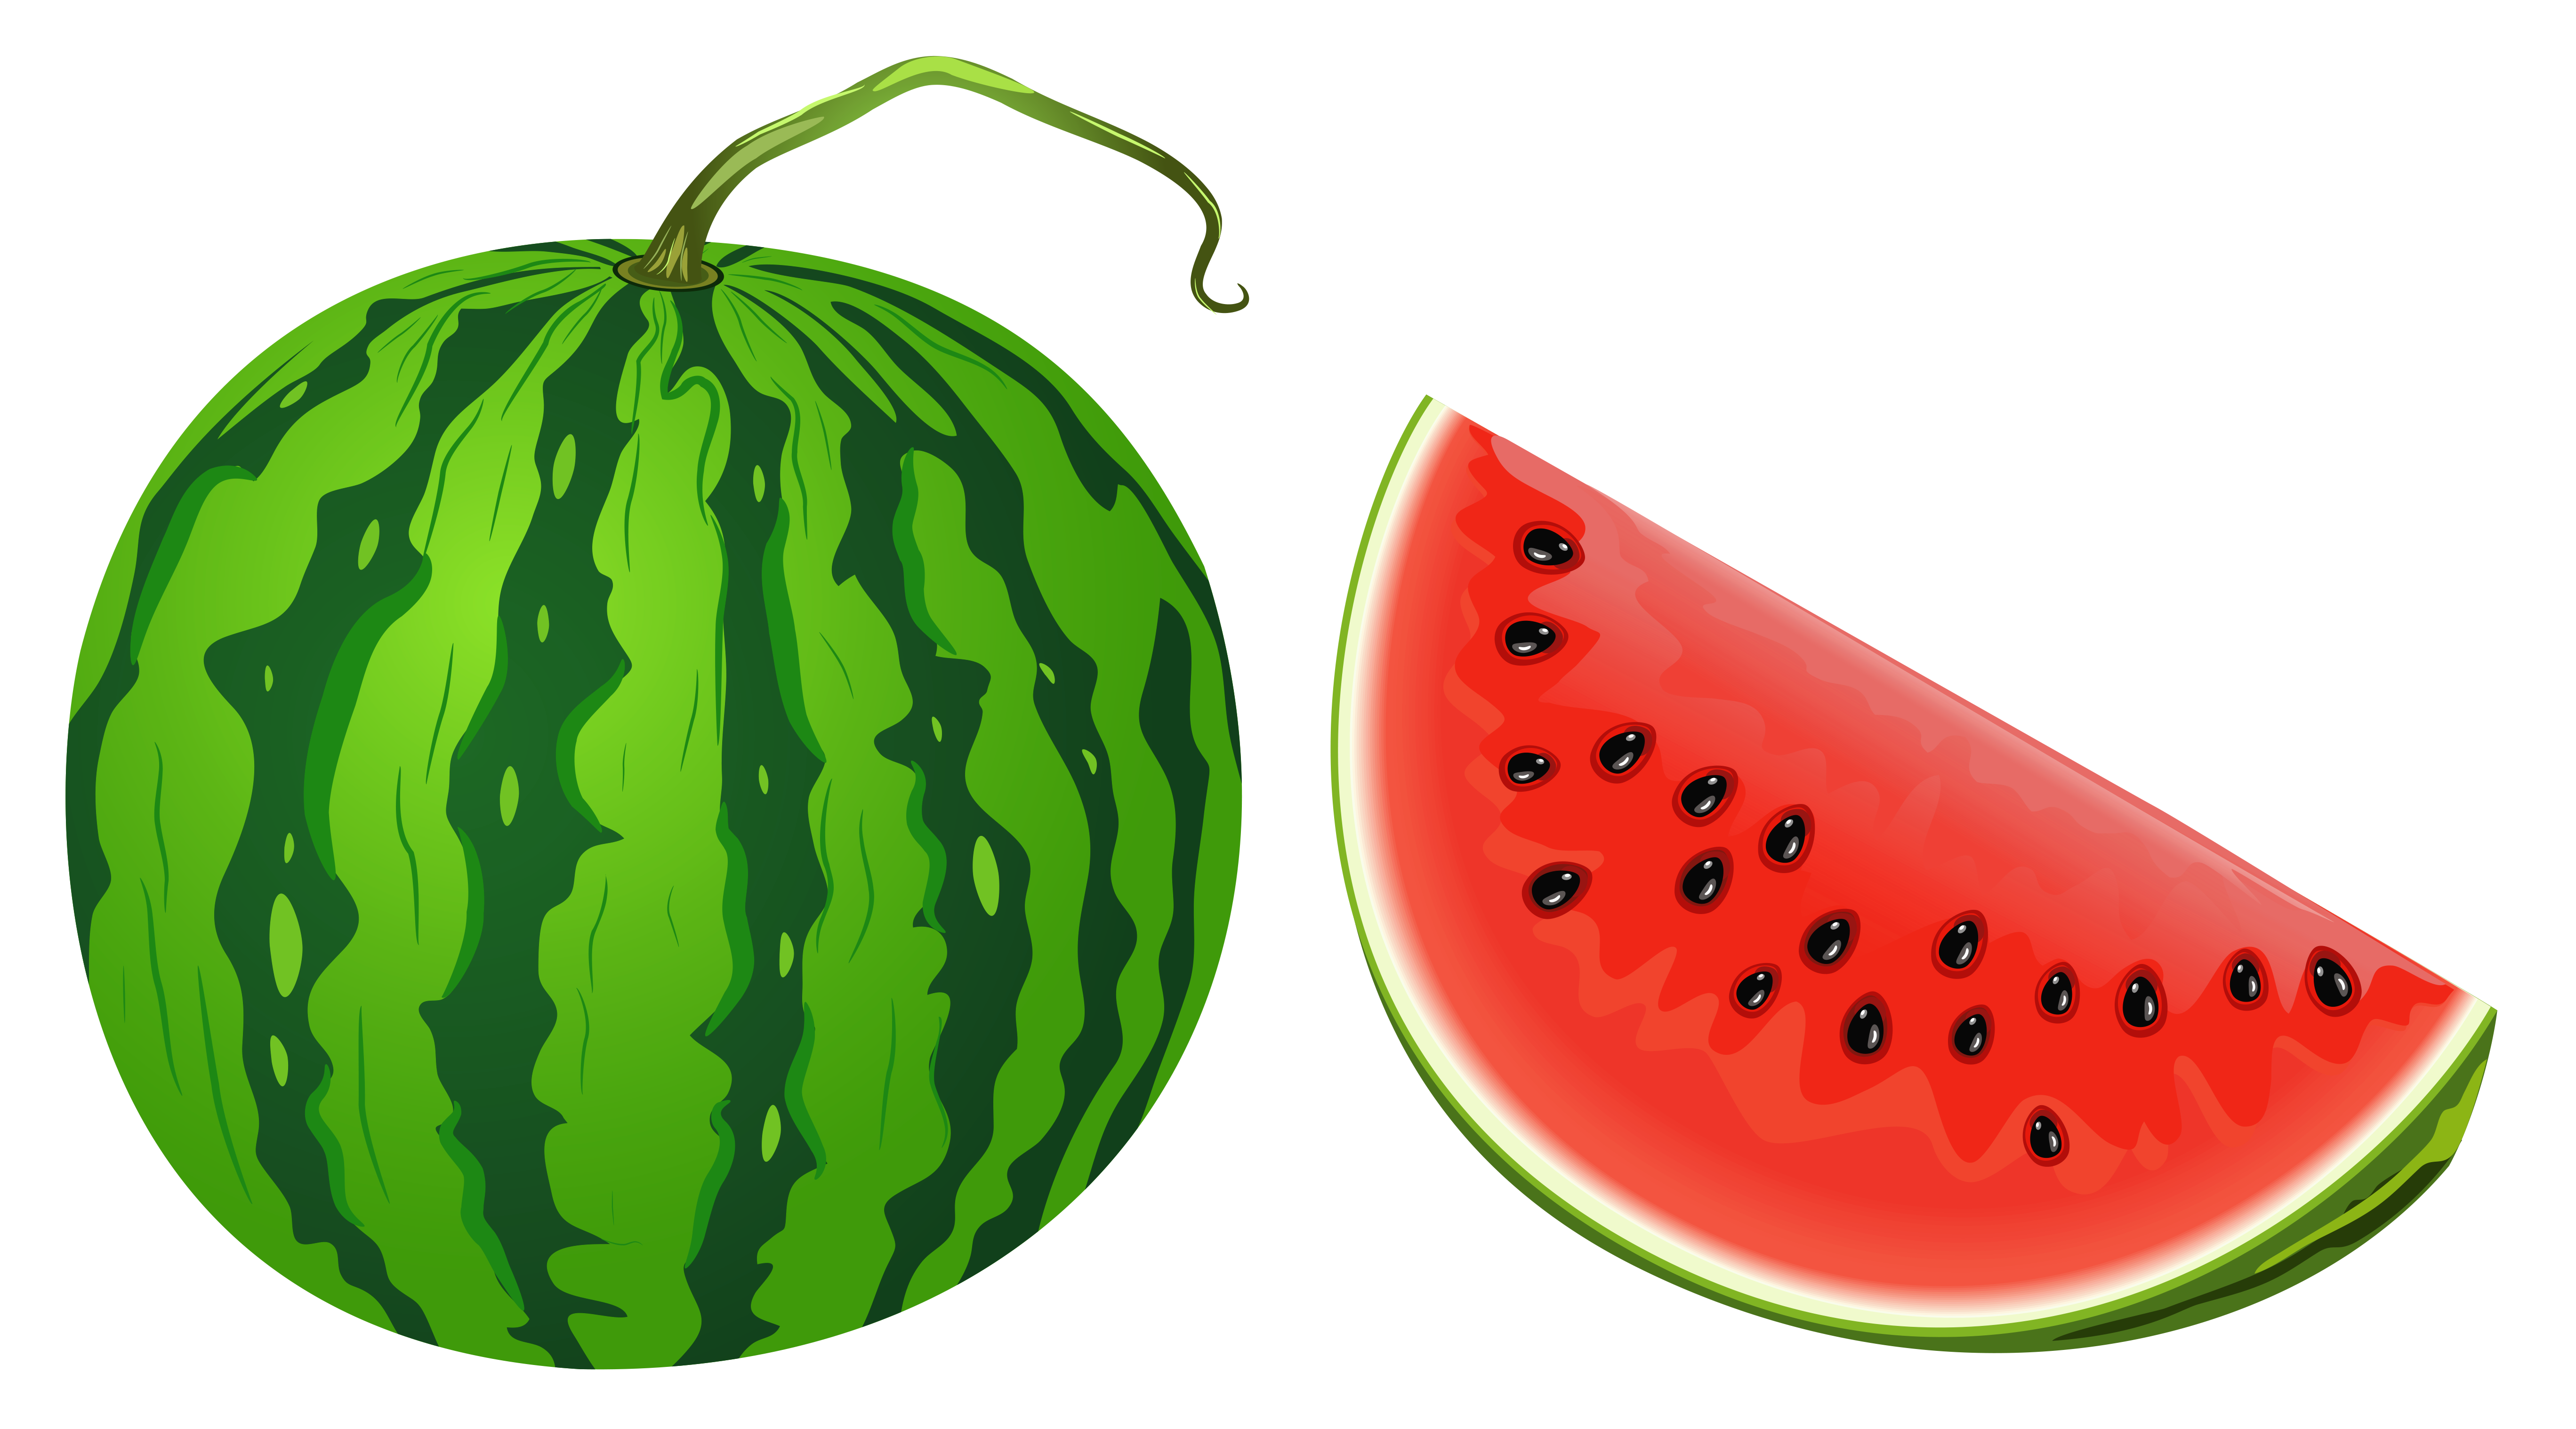 fruits vector png